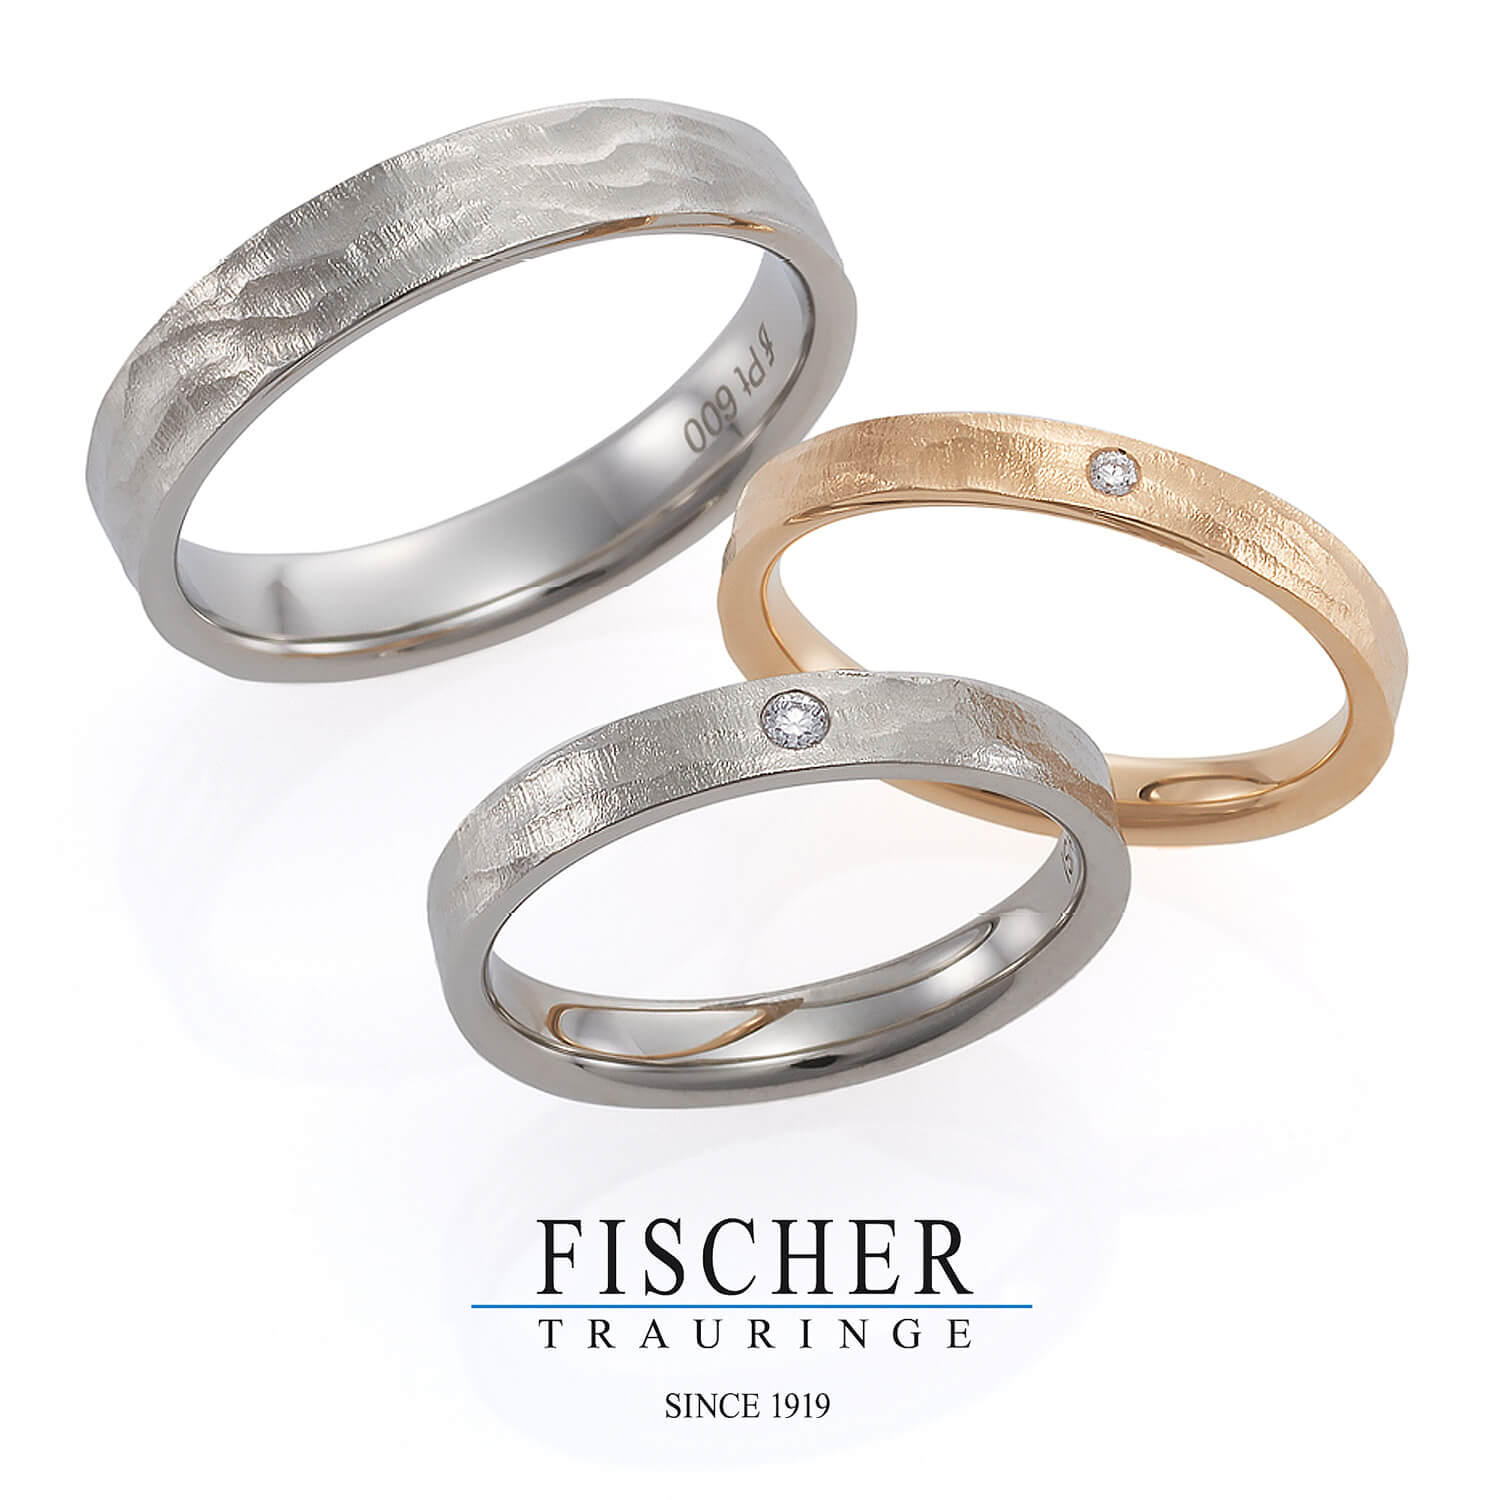 FISCHERフィッシャーの結婚指輪でWeddingRingウェディングリング9750920-025と9650920-040